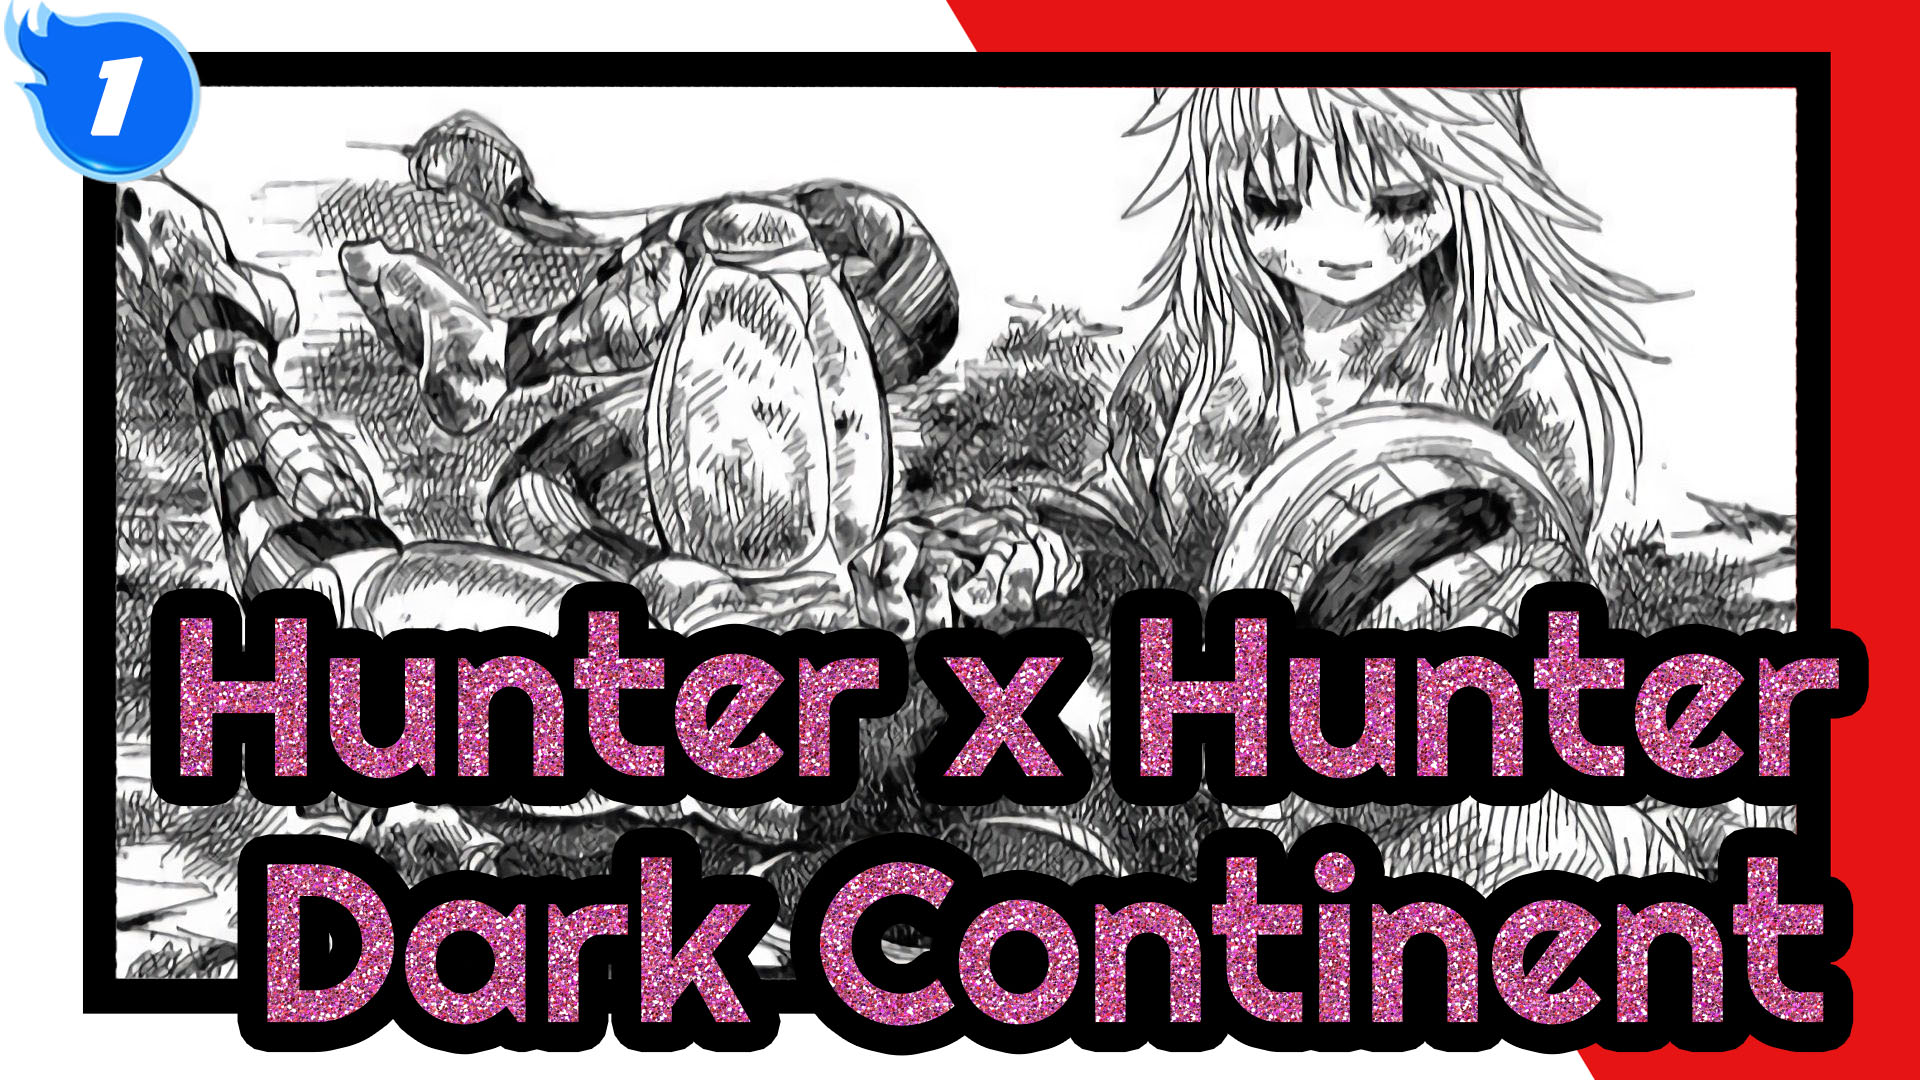 Hunter x Hunter, Dark Continent Arc